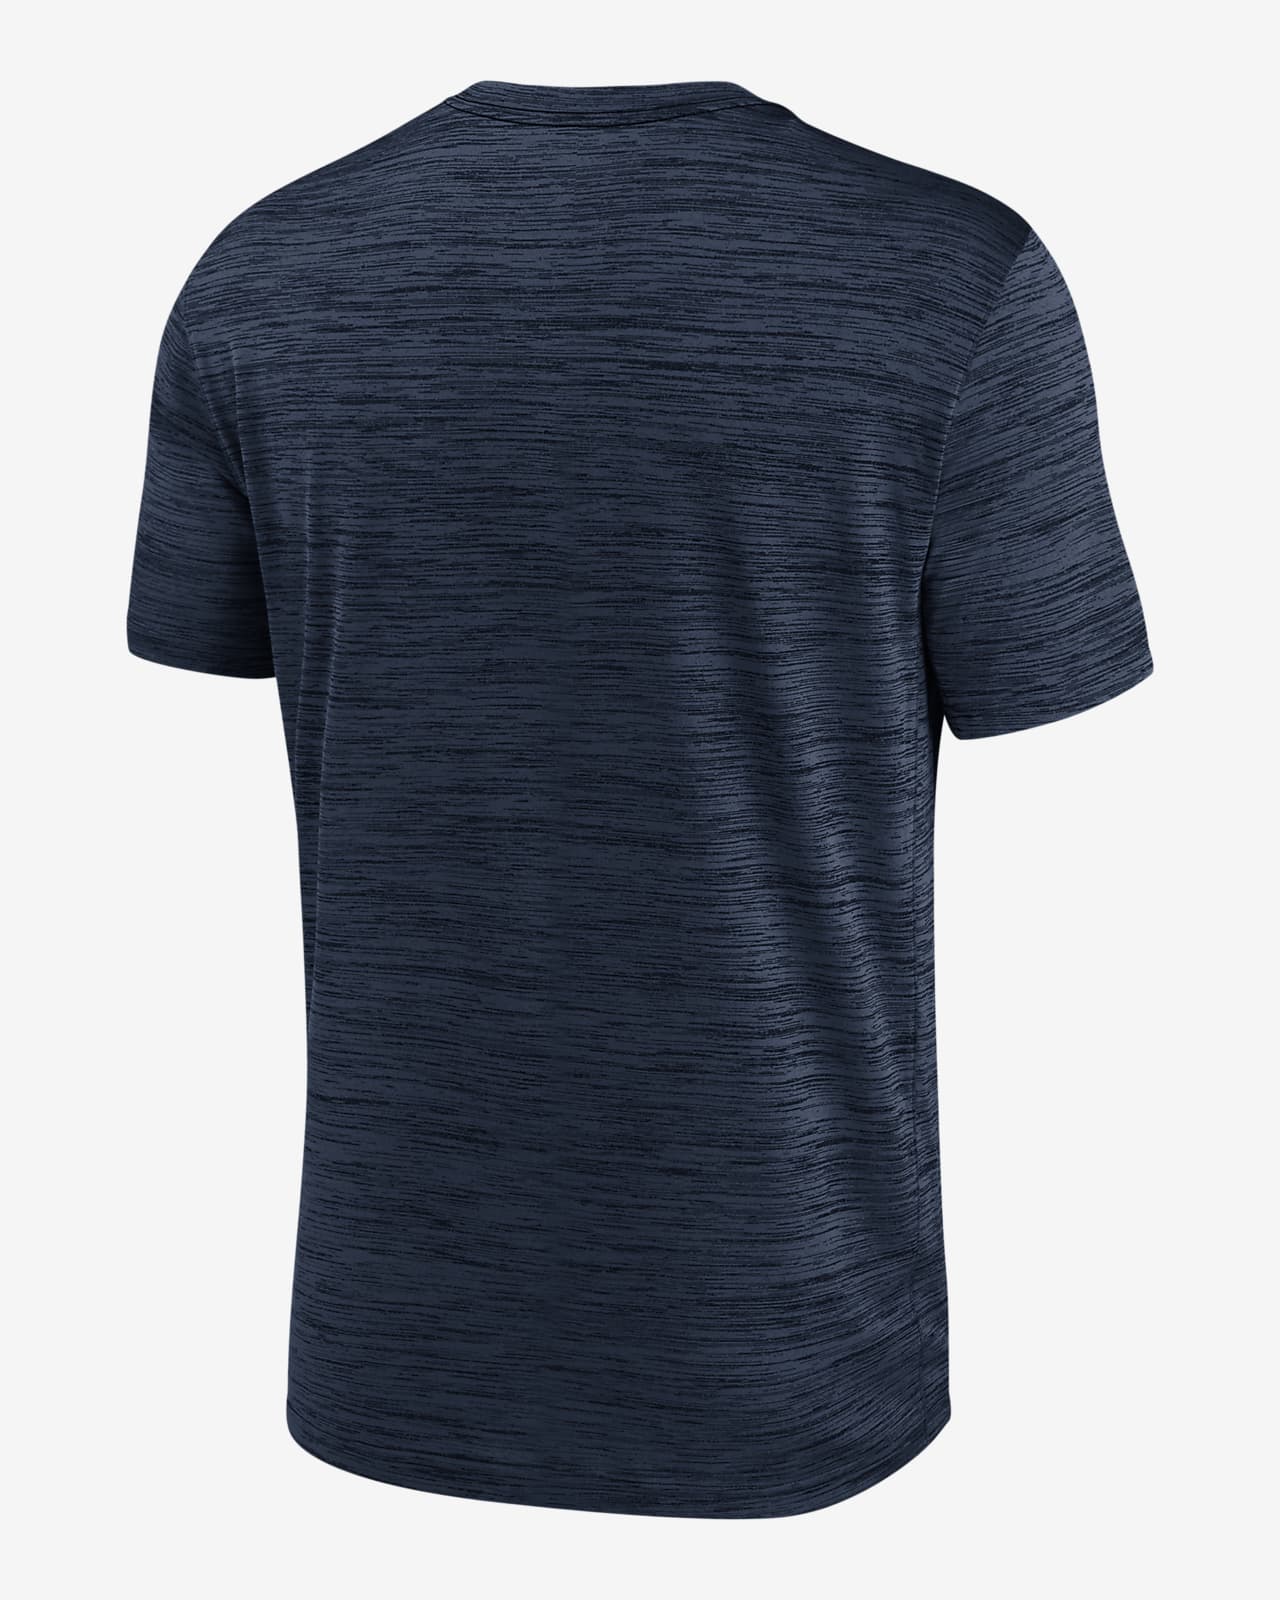 Nike Dri-FIT Sideline Velocity (NFL Dallas Cowboys) Men's T-Shirt.